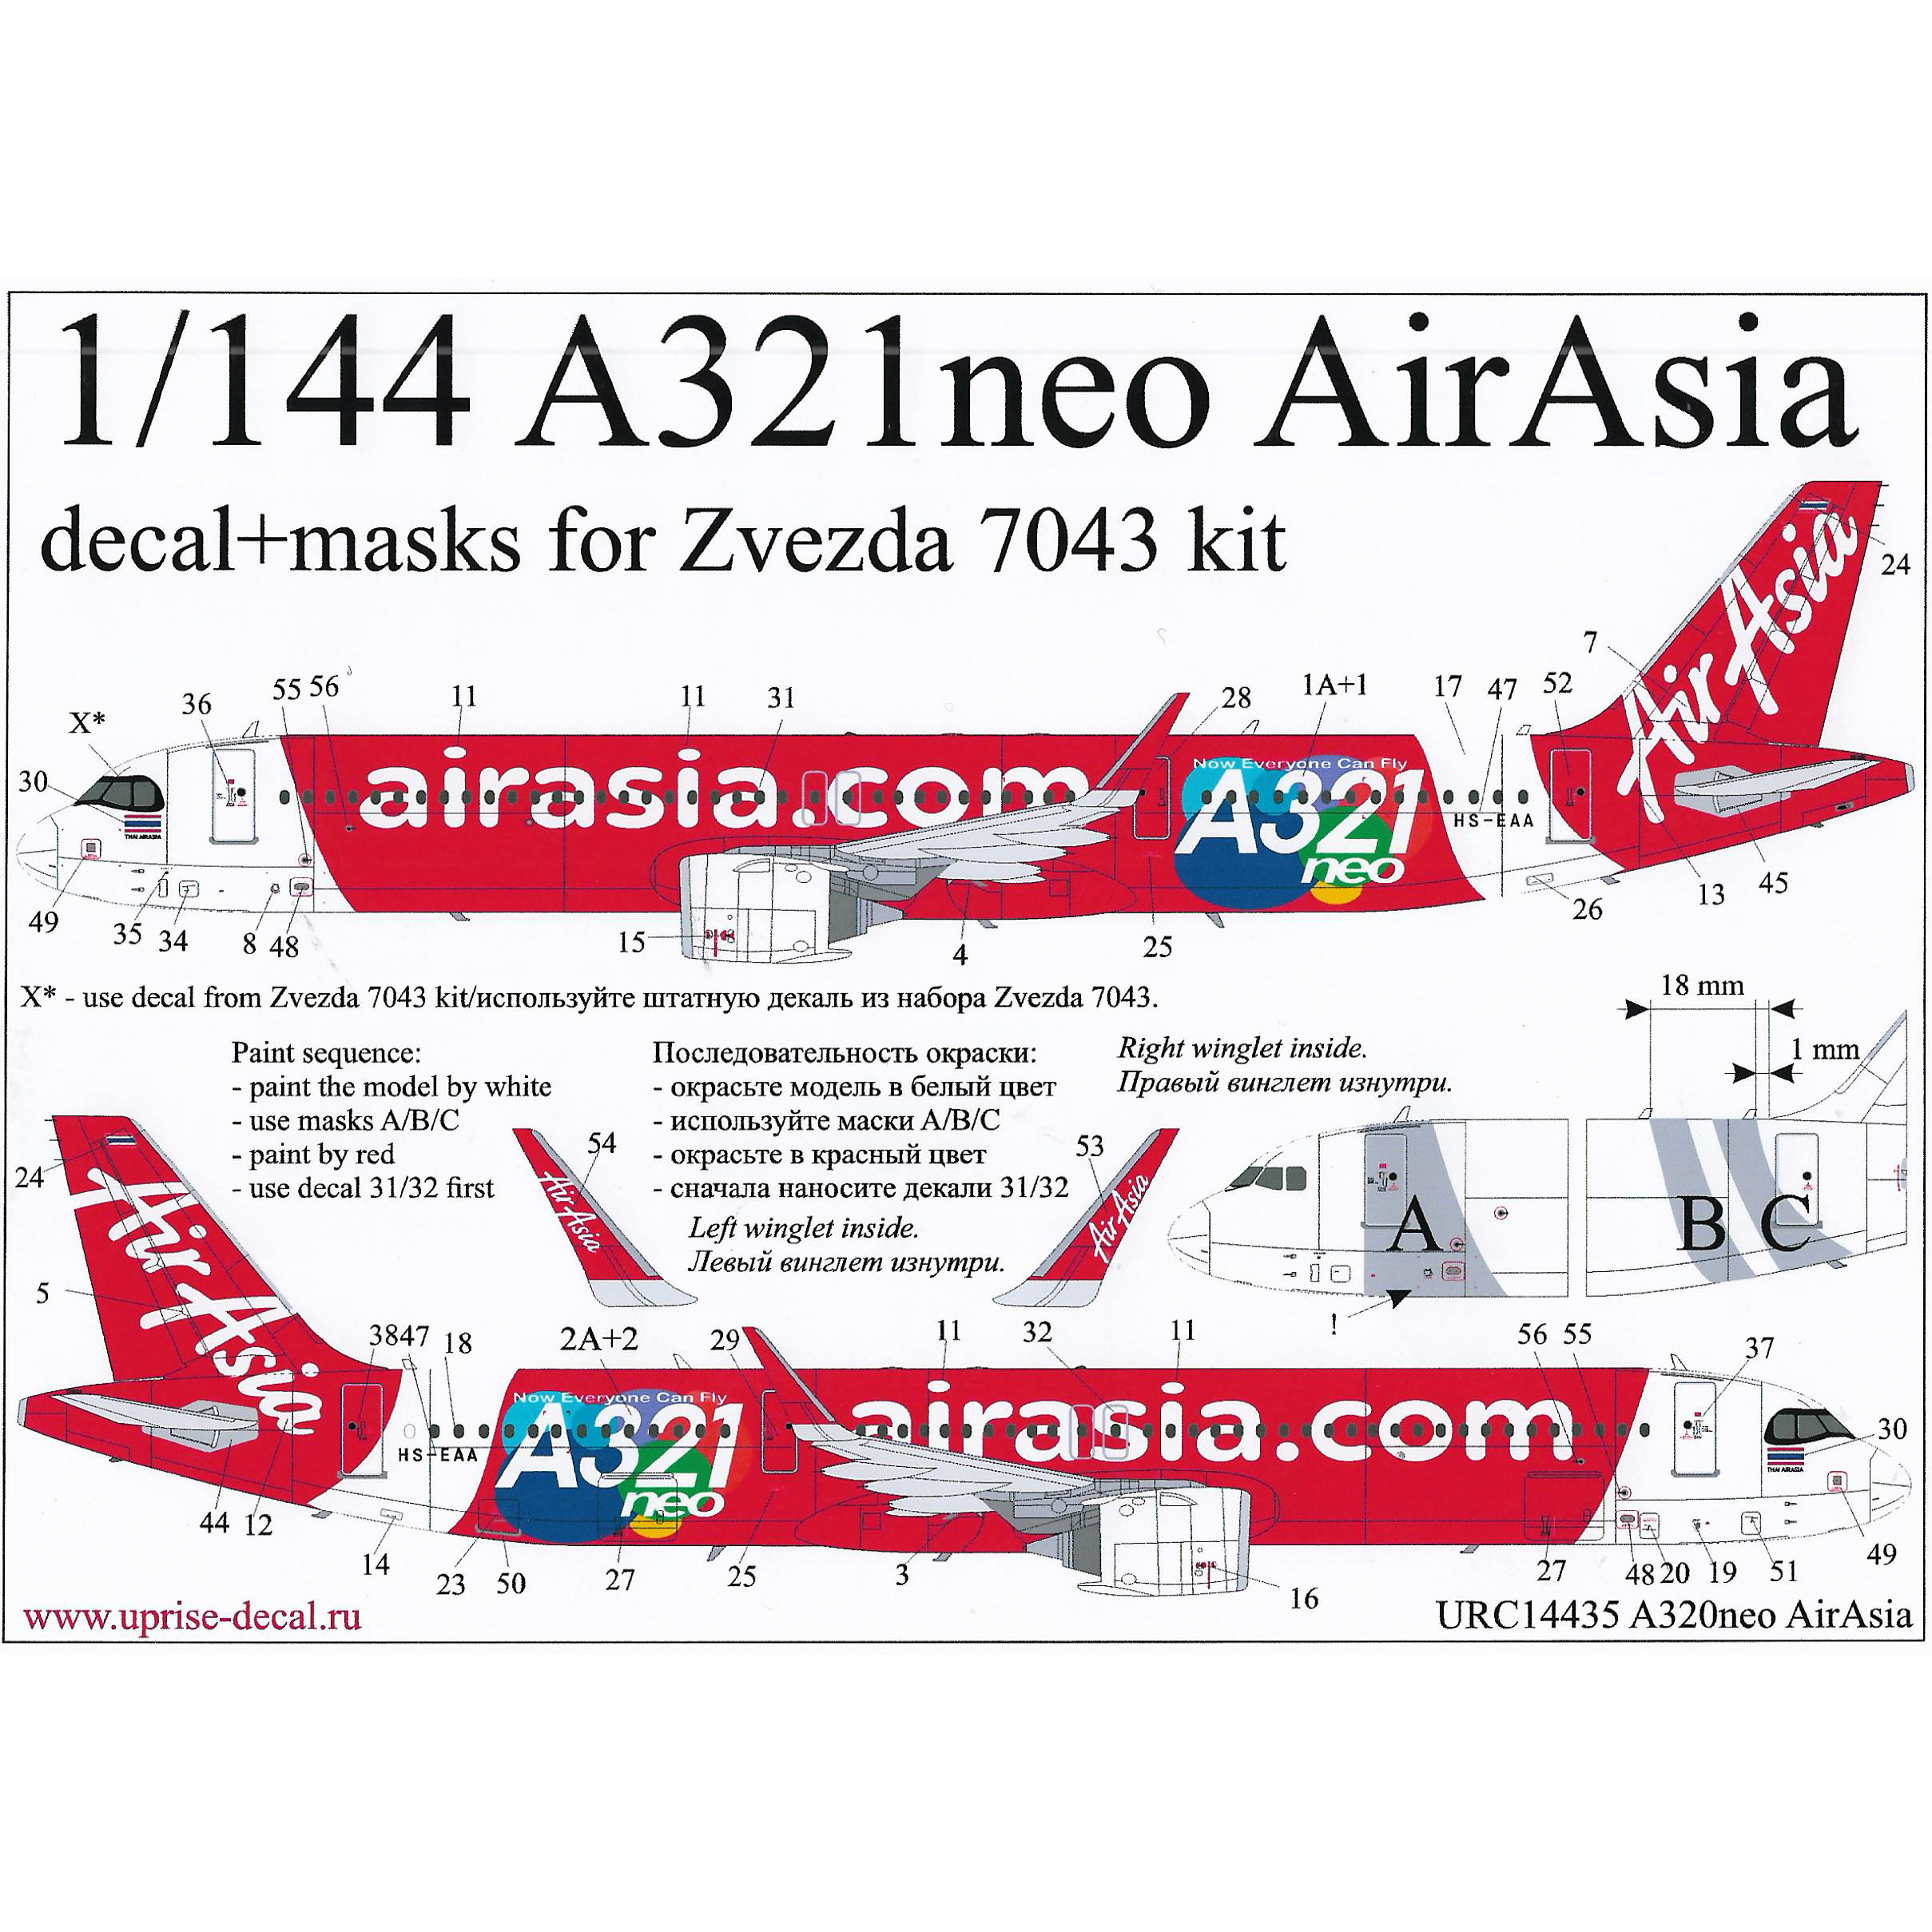 URC14435  декали  А320neo AirAsia (for Zvezda kit)  (1:144)